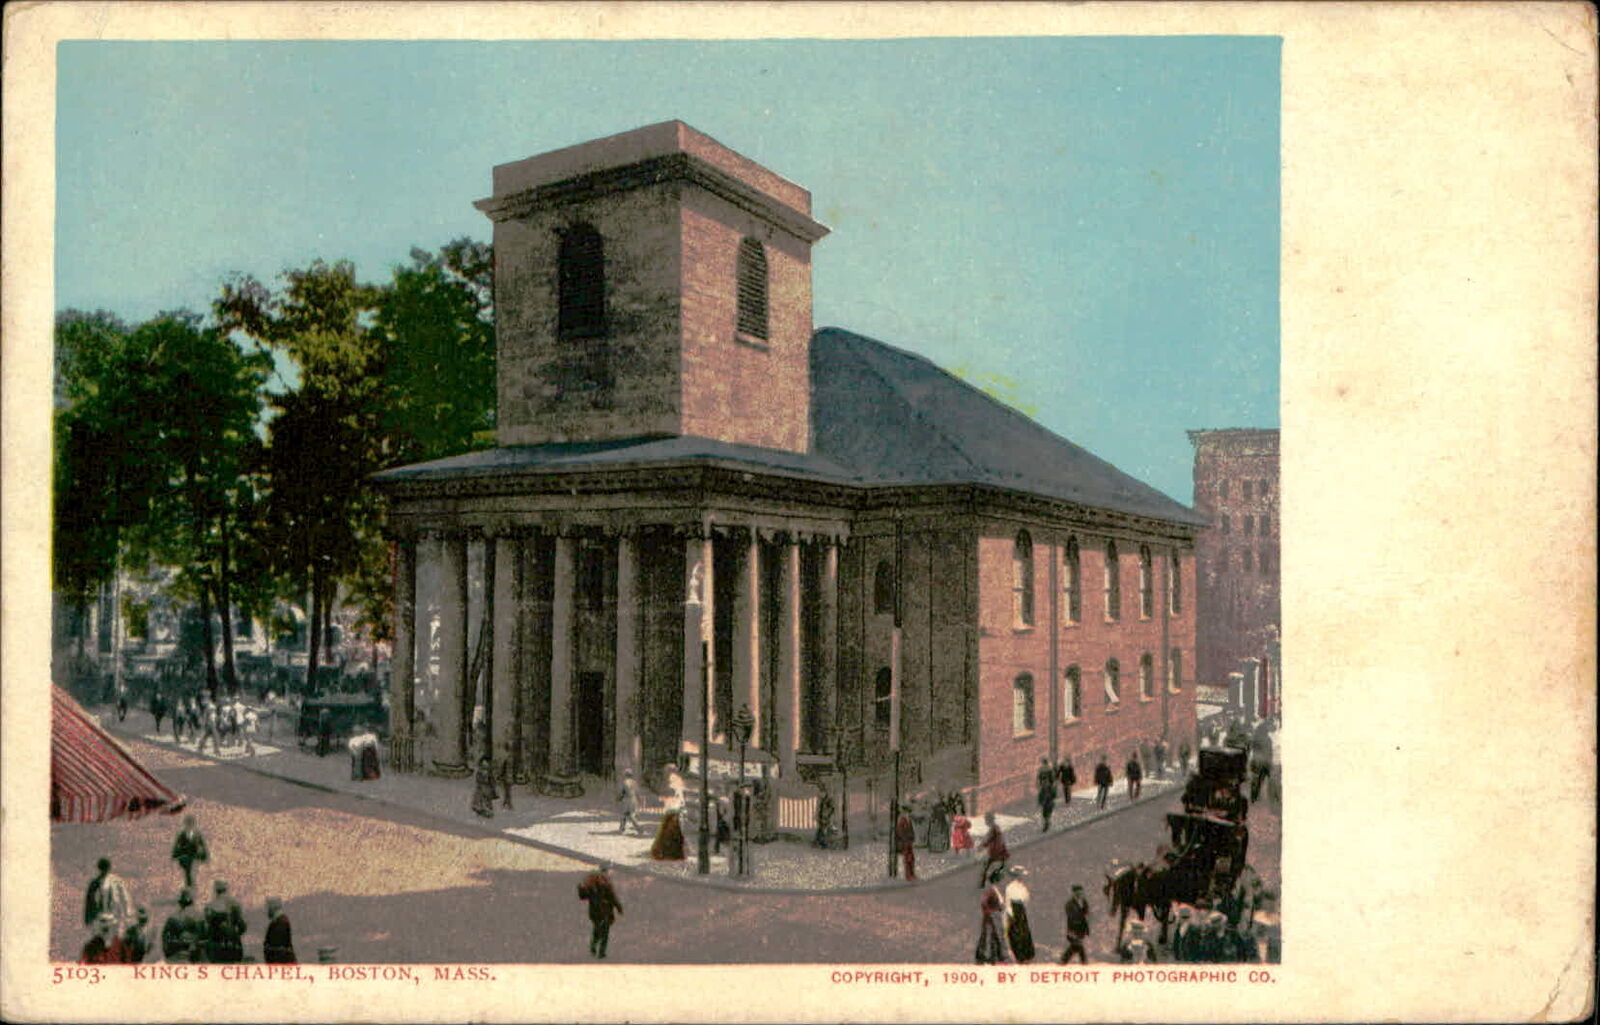 Postcard: 5103. KING\'S CHAPEL, BOSTON, MASS. COPYRIGHT, 1900, BY DETRO